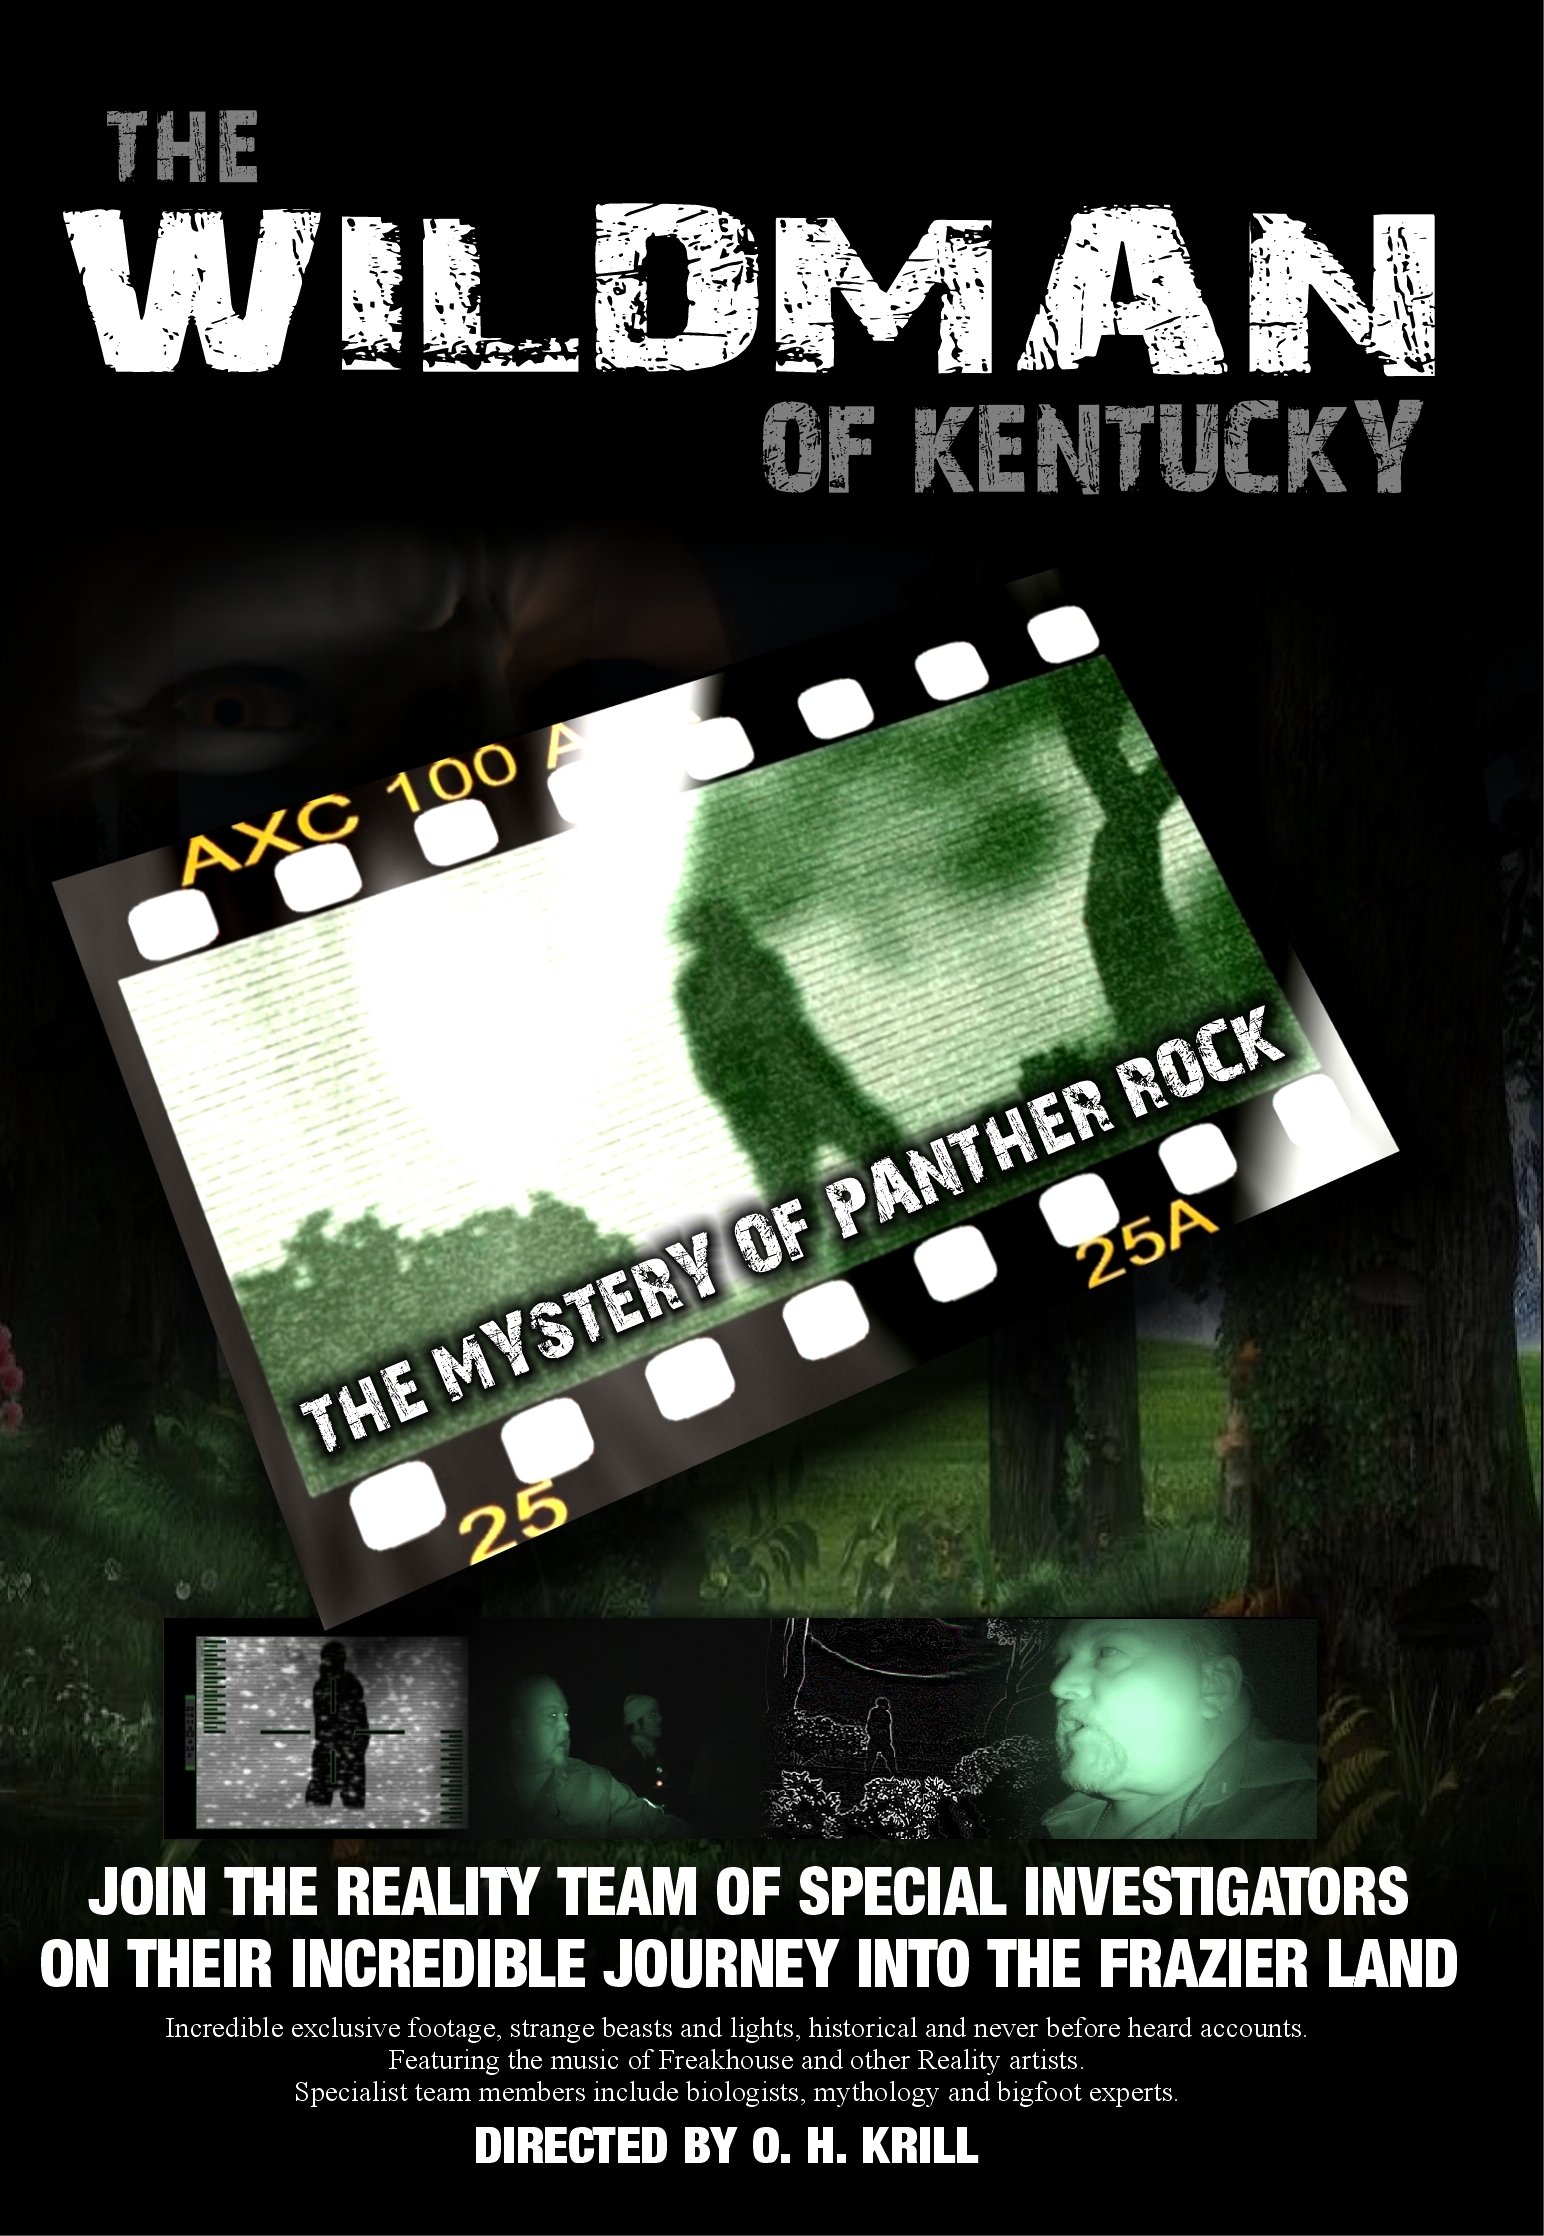 Philip Gardiner, O.H. Krill, Philip Spencer and Matt Clark in The Wildman of Kentucky: The Mystery of Panther Rock (2008)